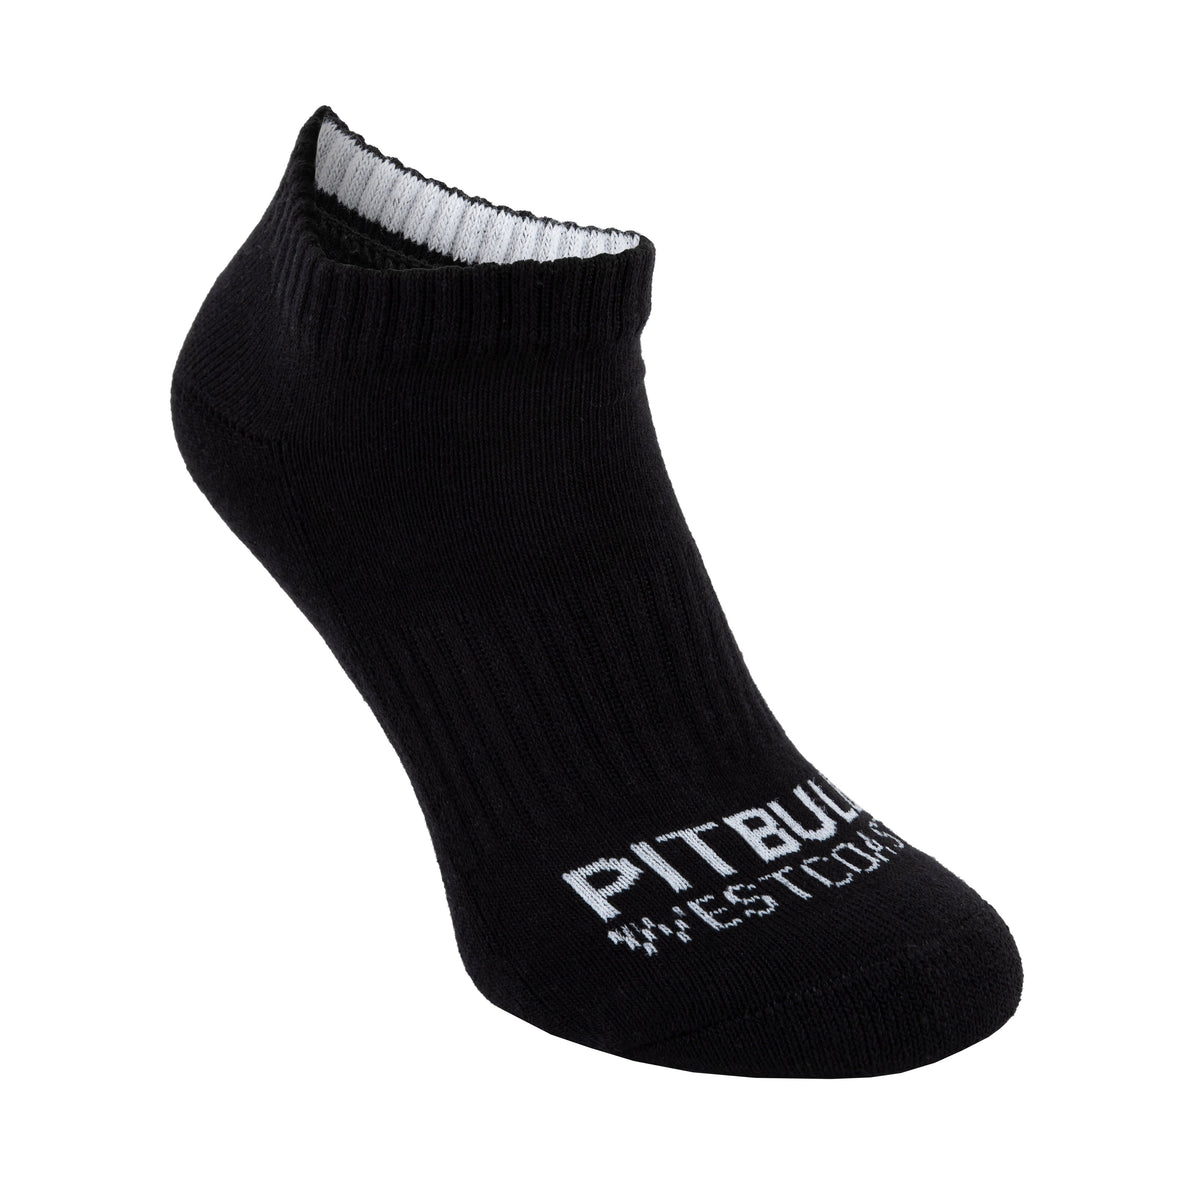 Socks Pad TNT 3pack Grey/Charcoal/Black - Pitbull West Coast International Store 